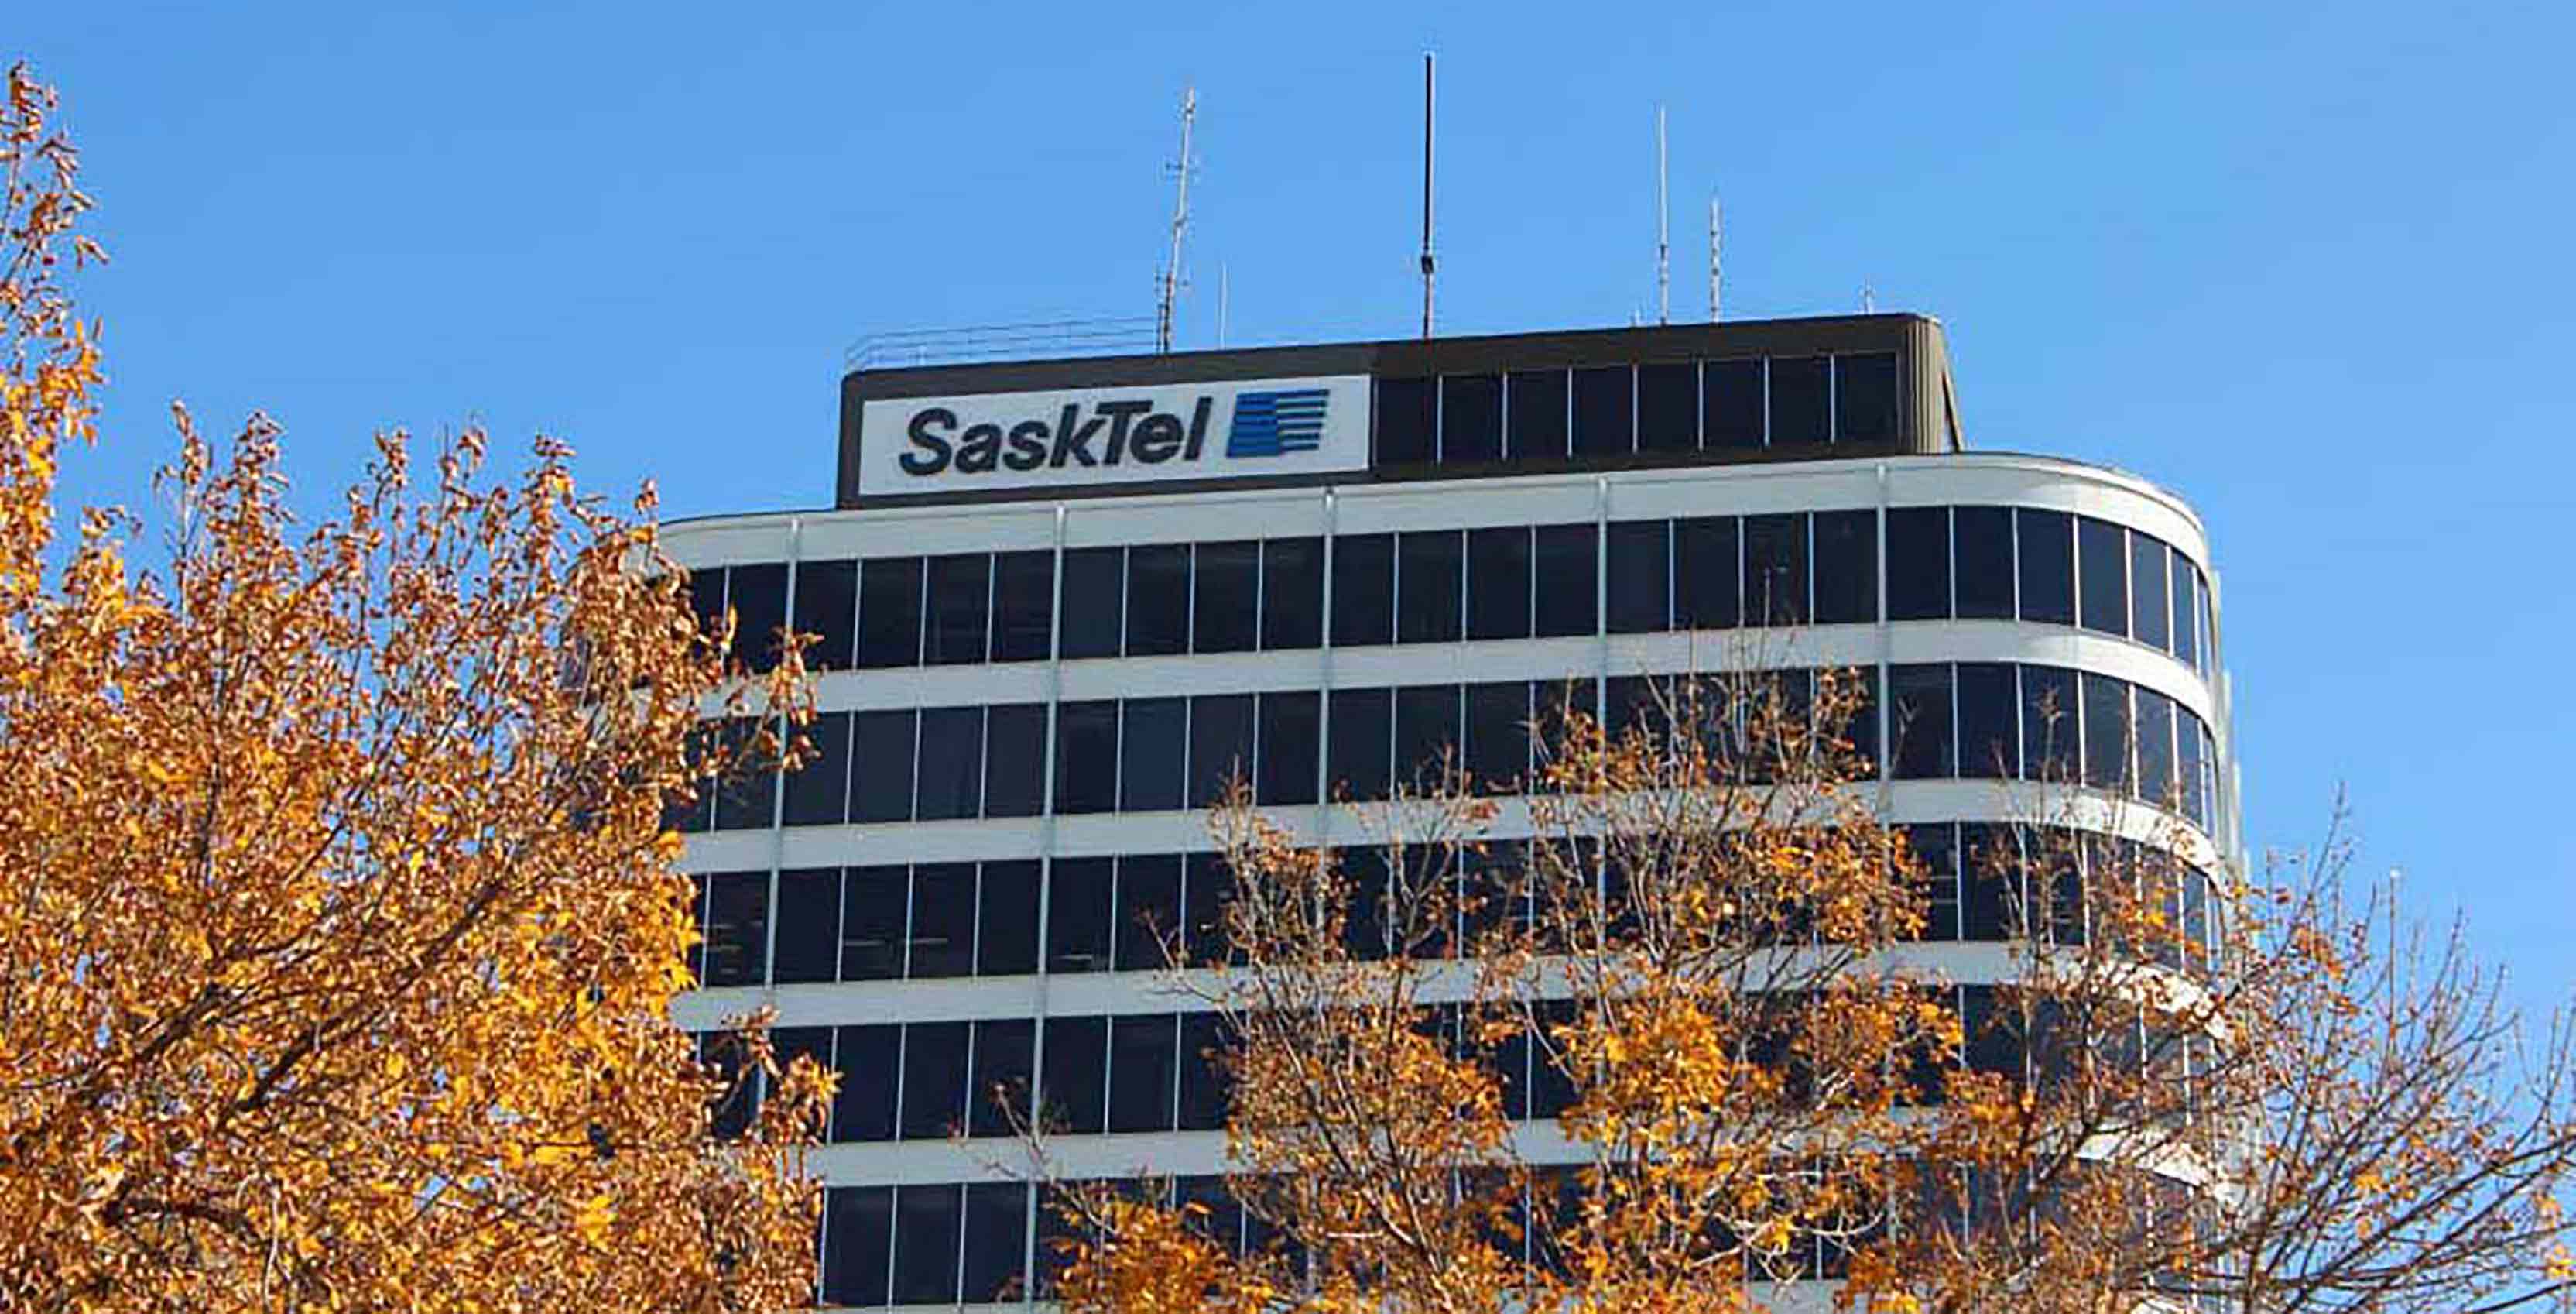 An image of SaskTel's Saskatchewan headquarters